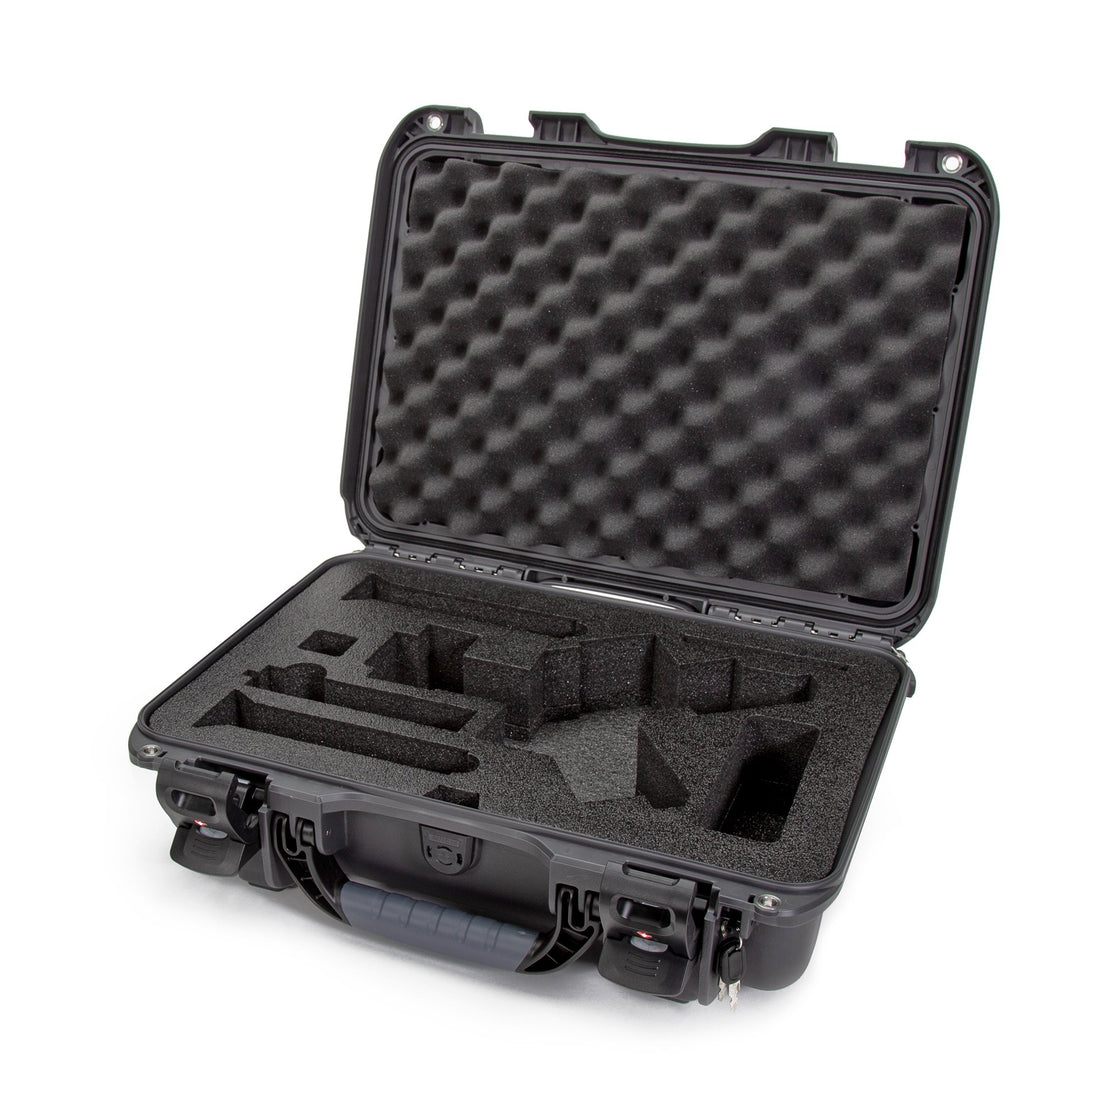 Nanuk 923 Waterproof Hard Case with Custom Foam Insert for Ronin-S Gimbal - Graphite